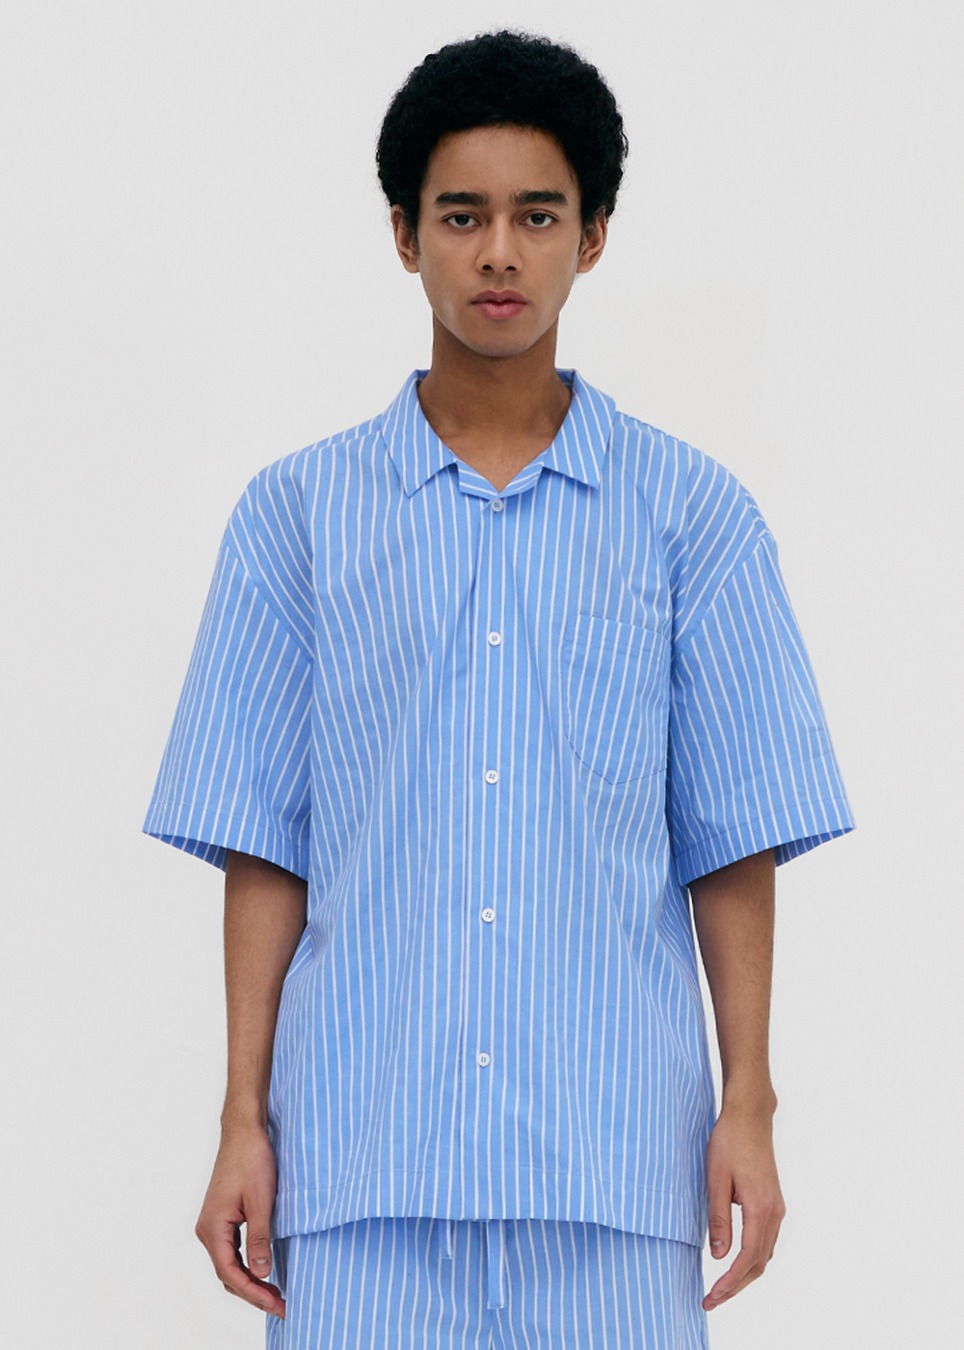 Stay Stripe Pajamas Short Sleeve Shirts - Light Blue